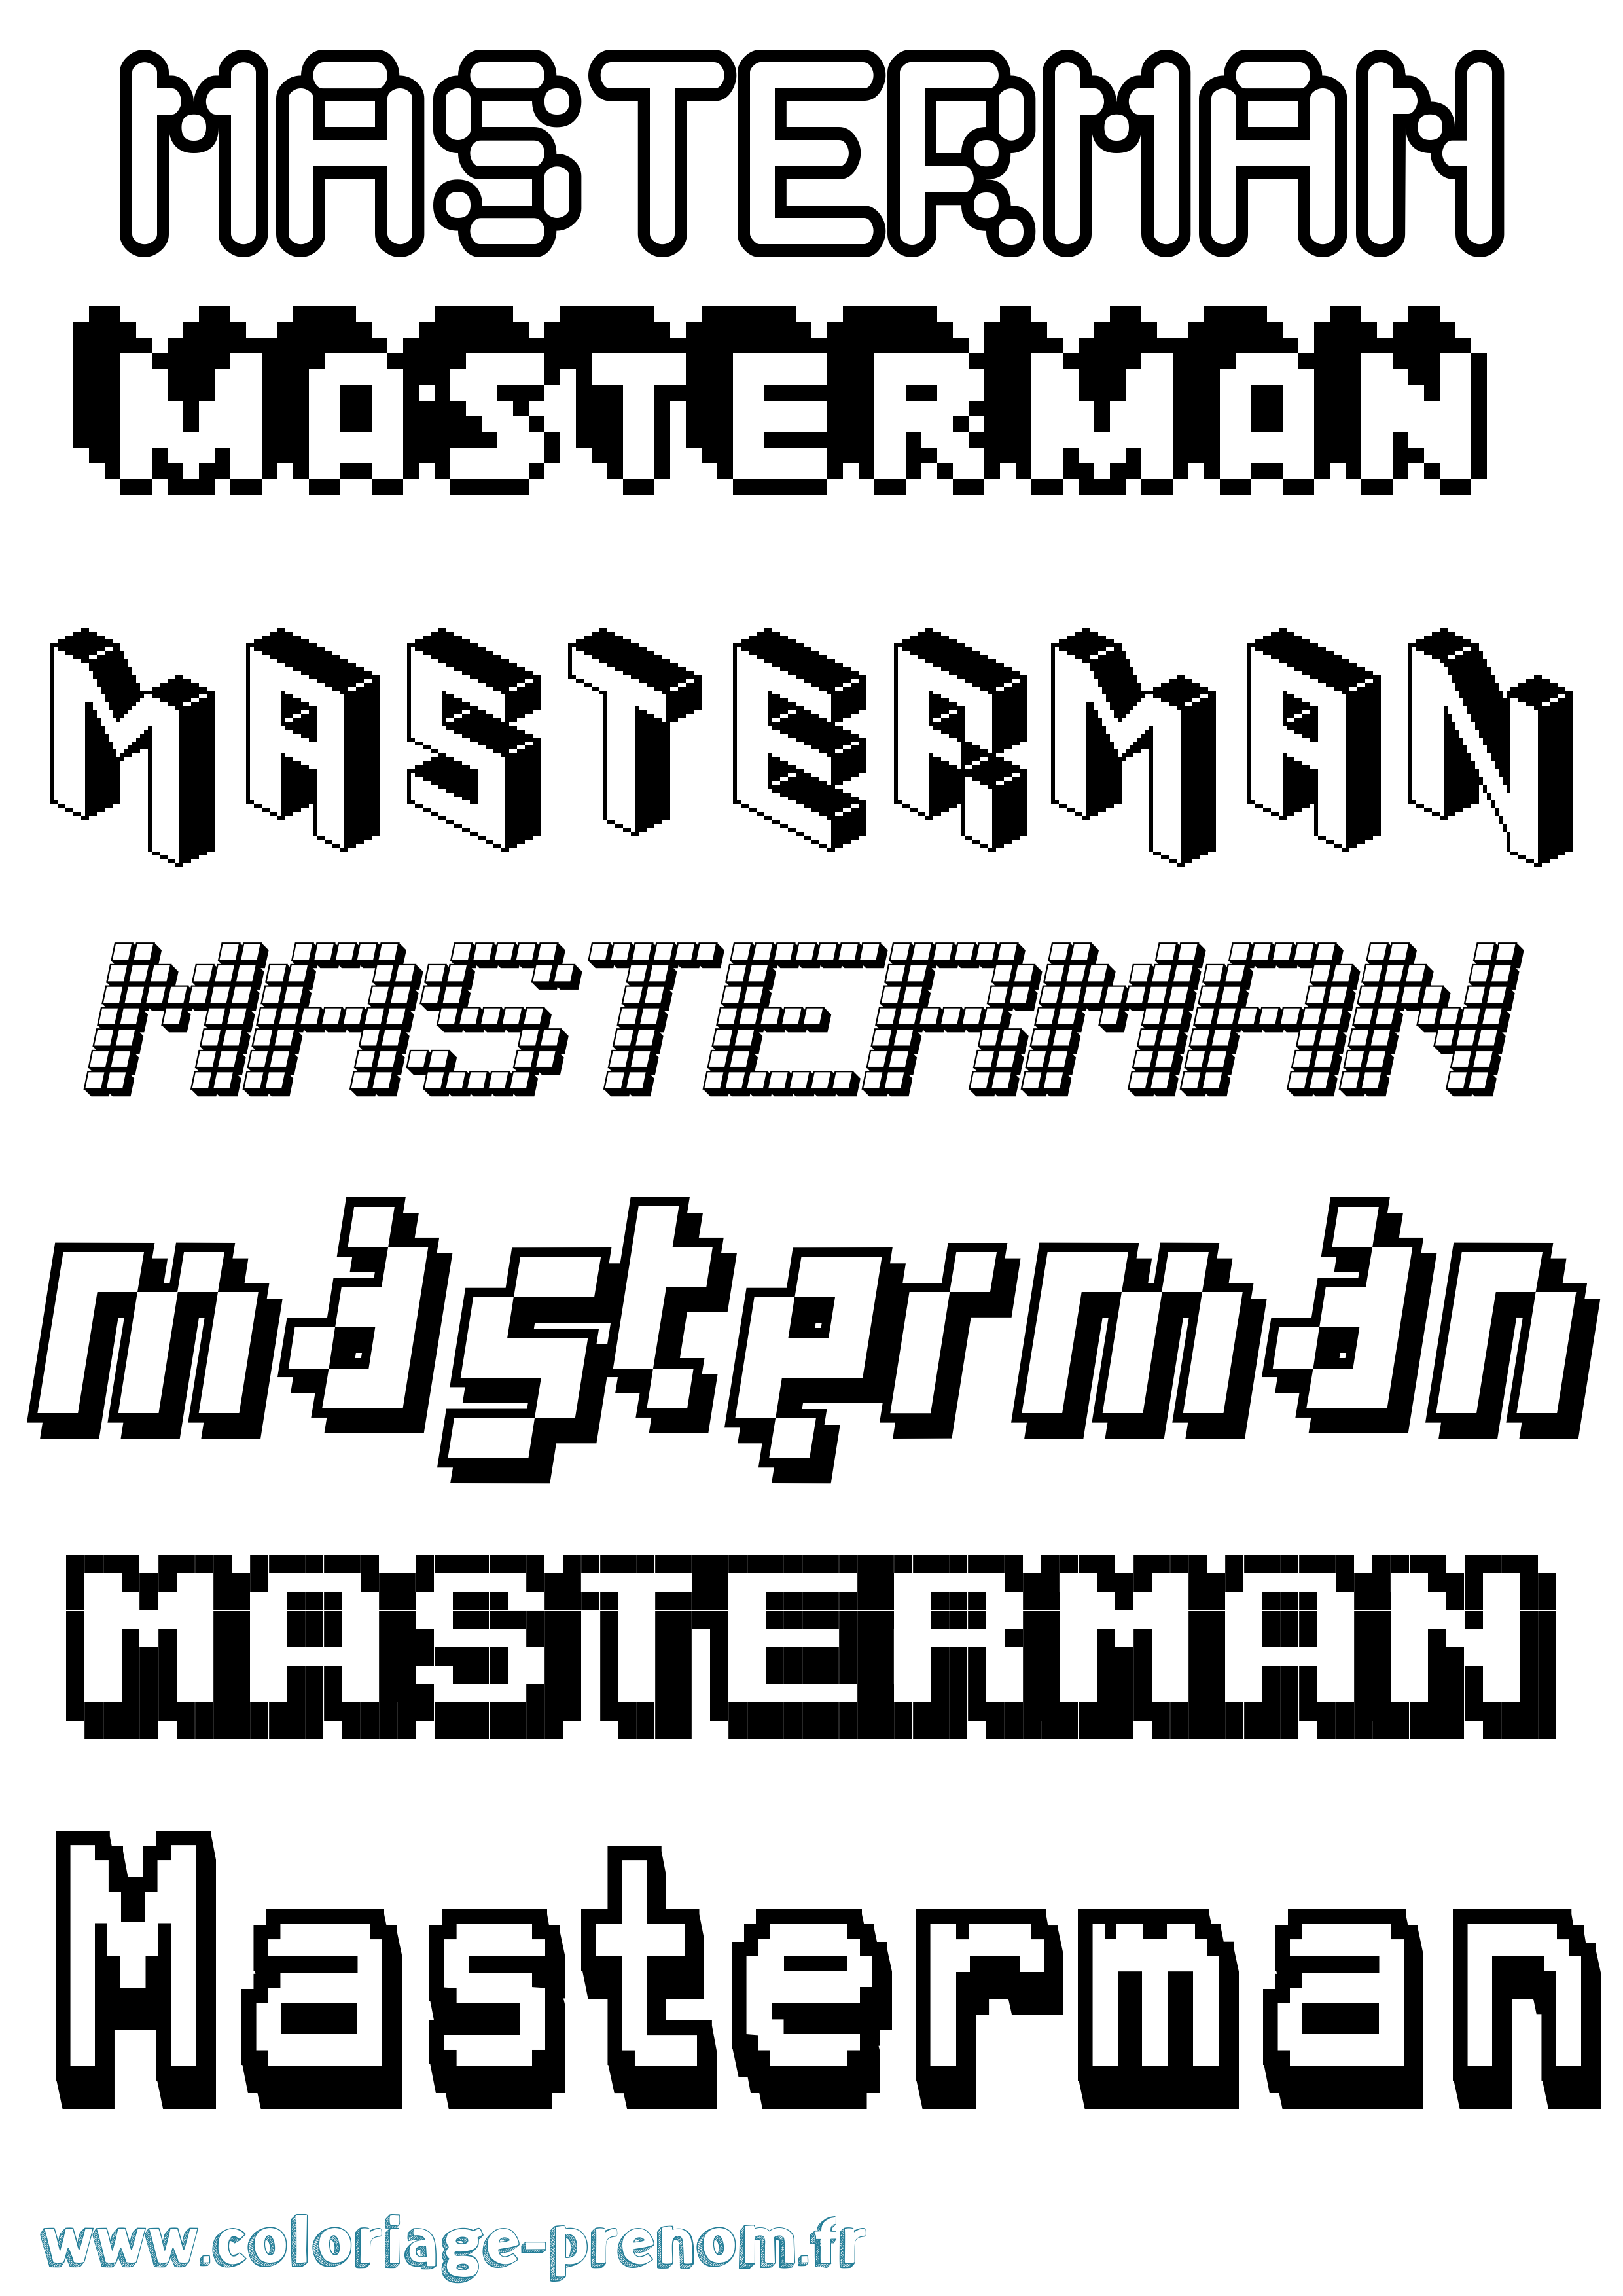 Coloriage prénom Masterman Pixel